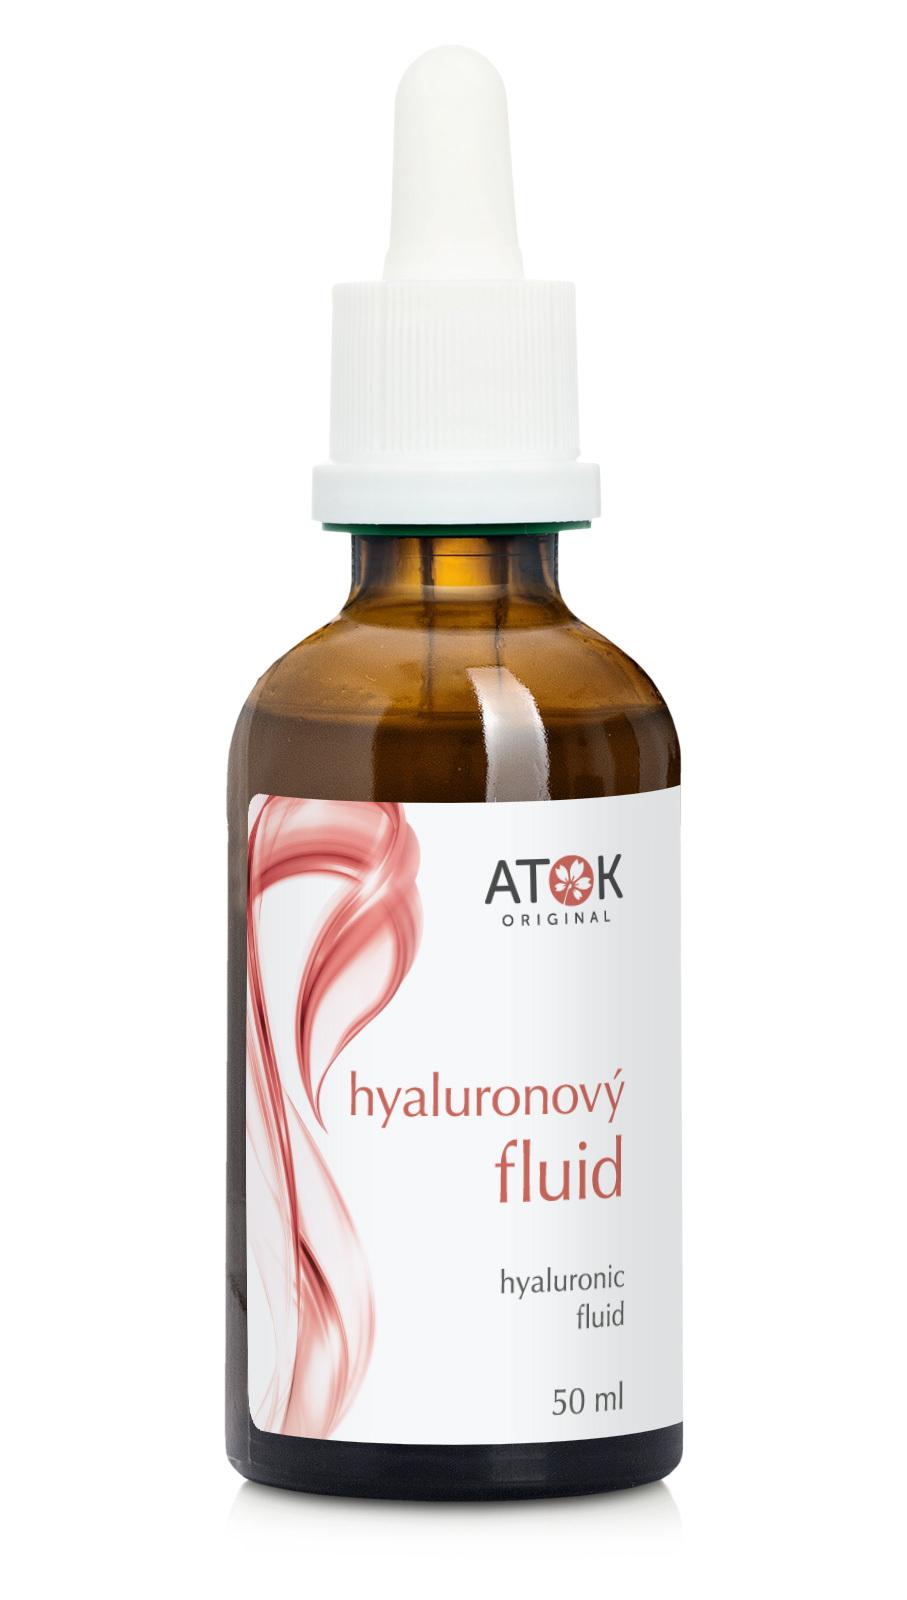 Hyalurónový fluid - Original ATOK Obsah: 50 ml